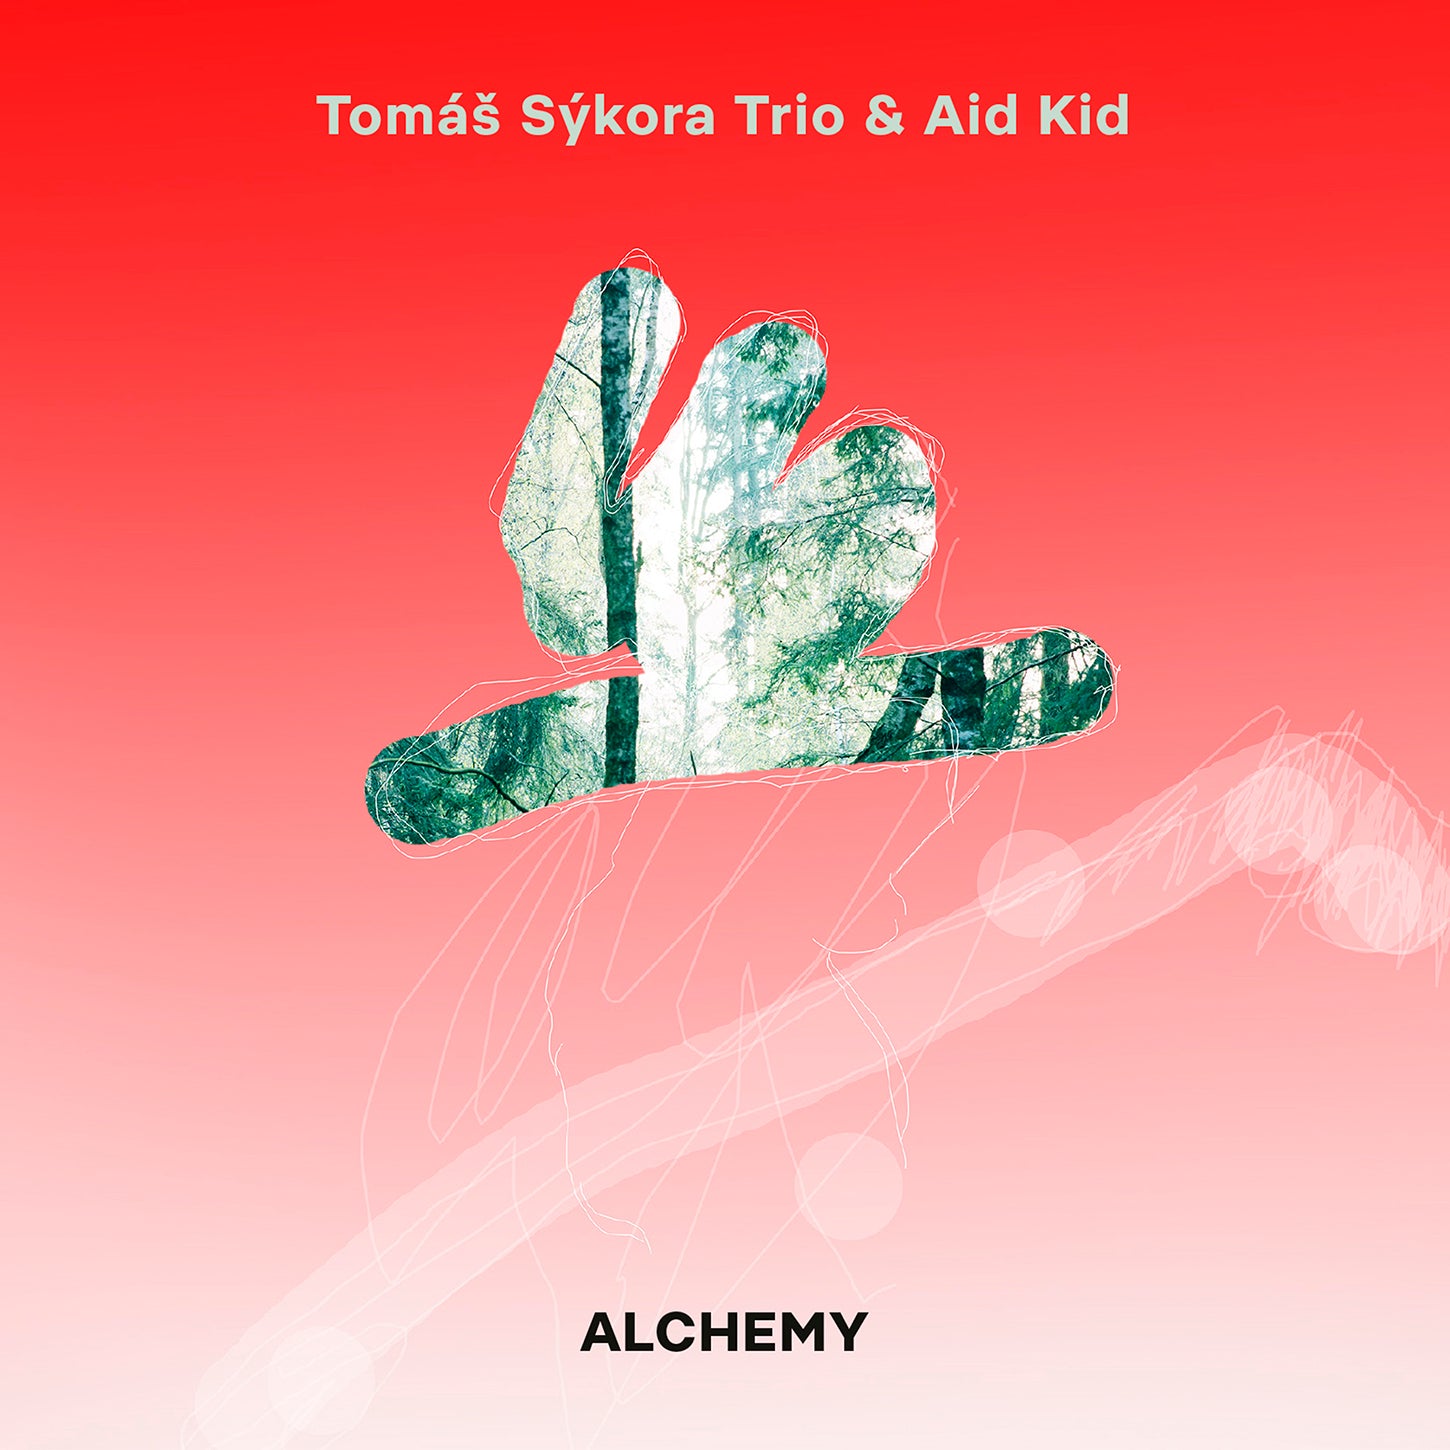 Tomas Sykora Trio & Aid Kid - Alchemy